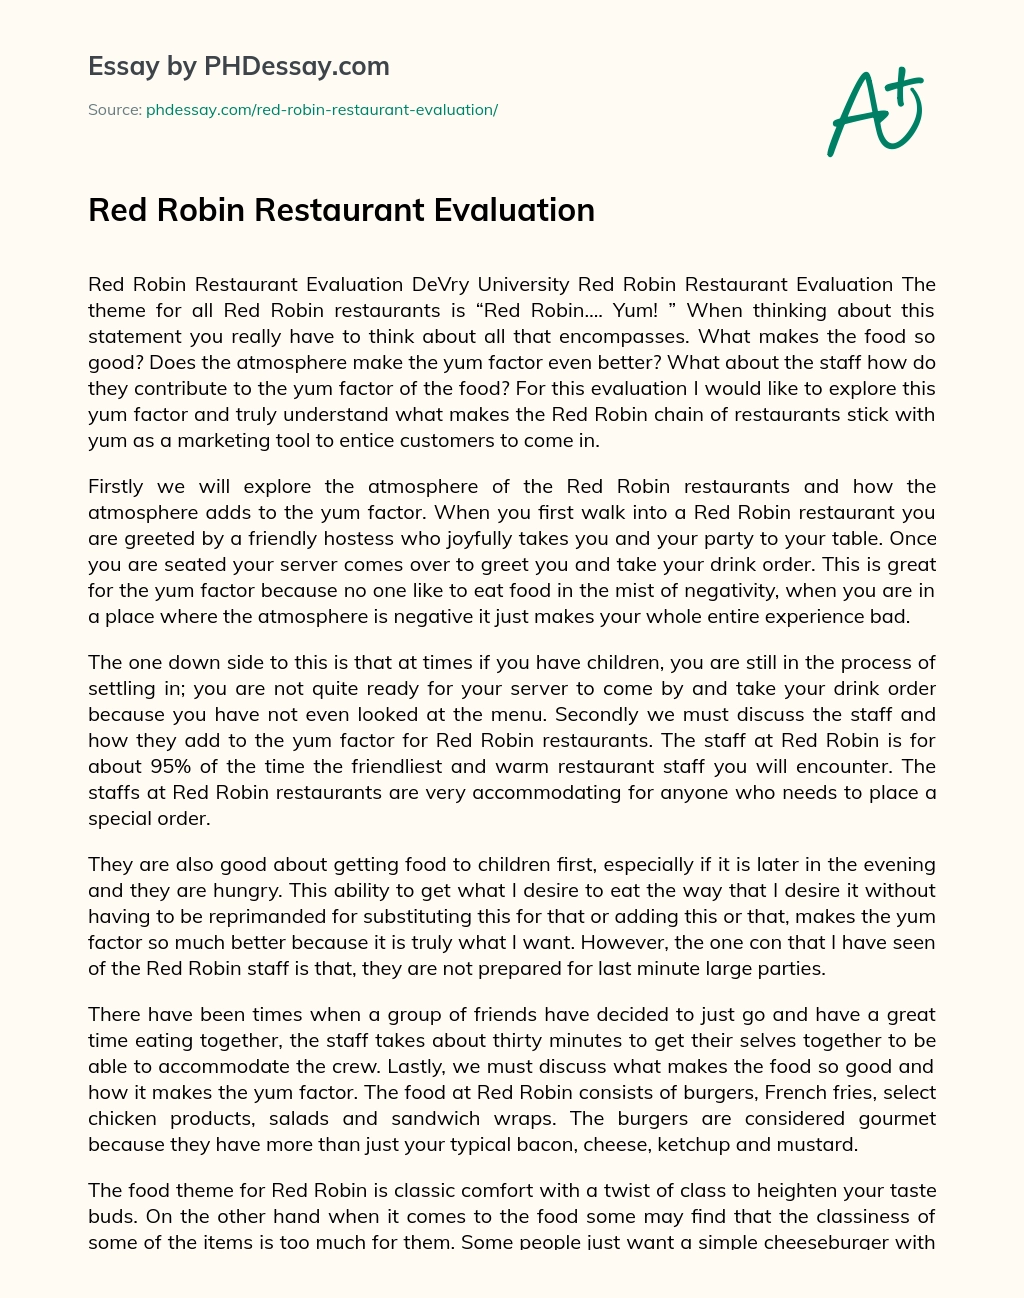 Red Robin Restaurant Evaluation essay